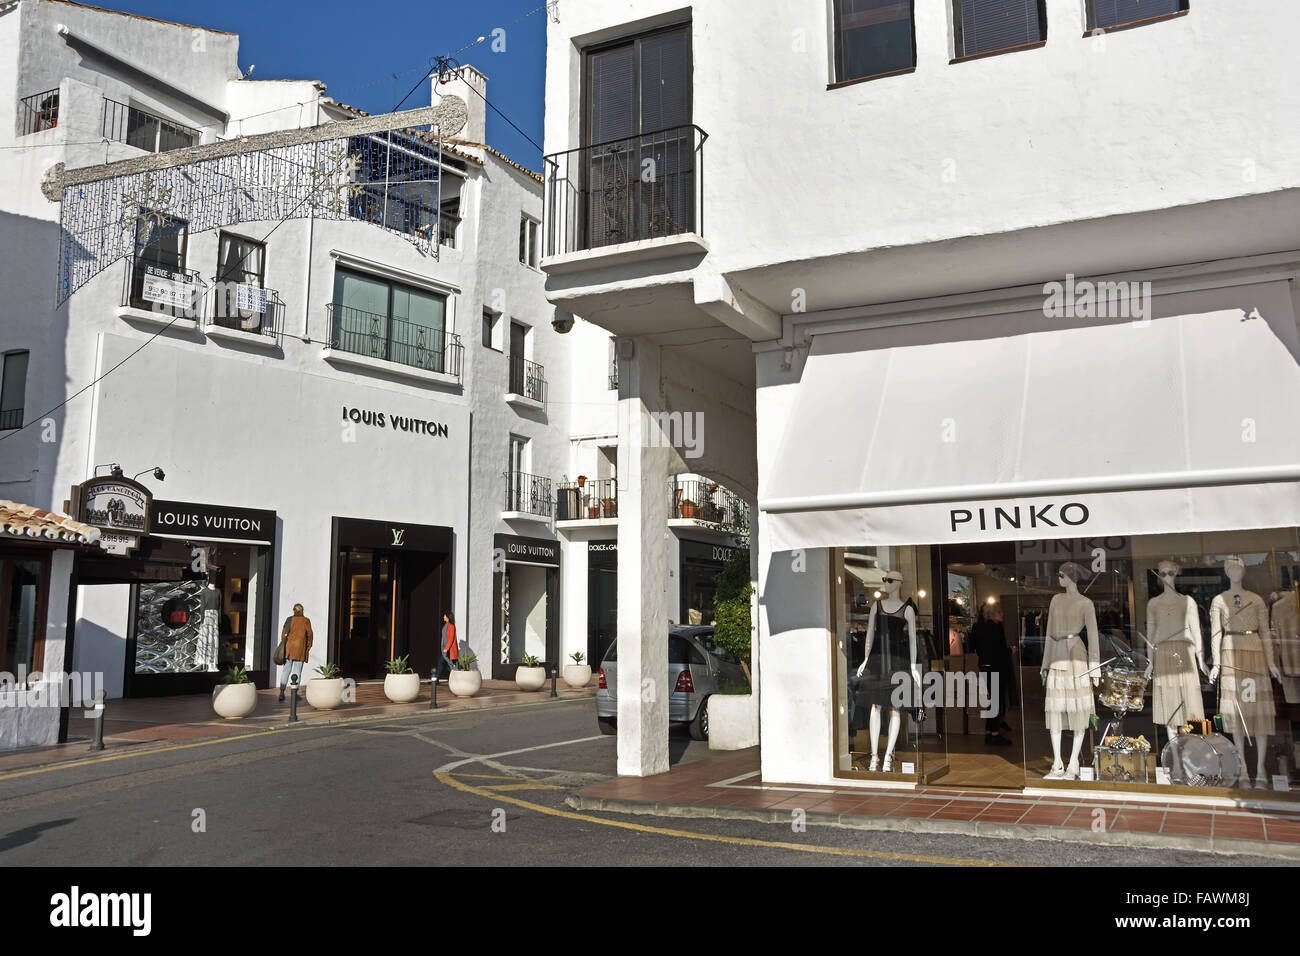 Pinko - Louis Vuitton tiendas de moda español de Marbella Costa del Sol  Andalucía España Fotografía de stock - Alamy